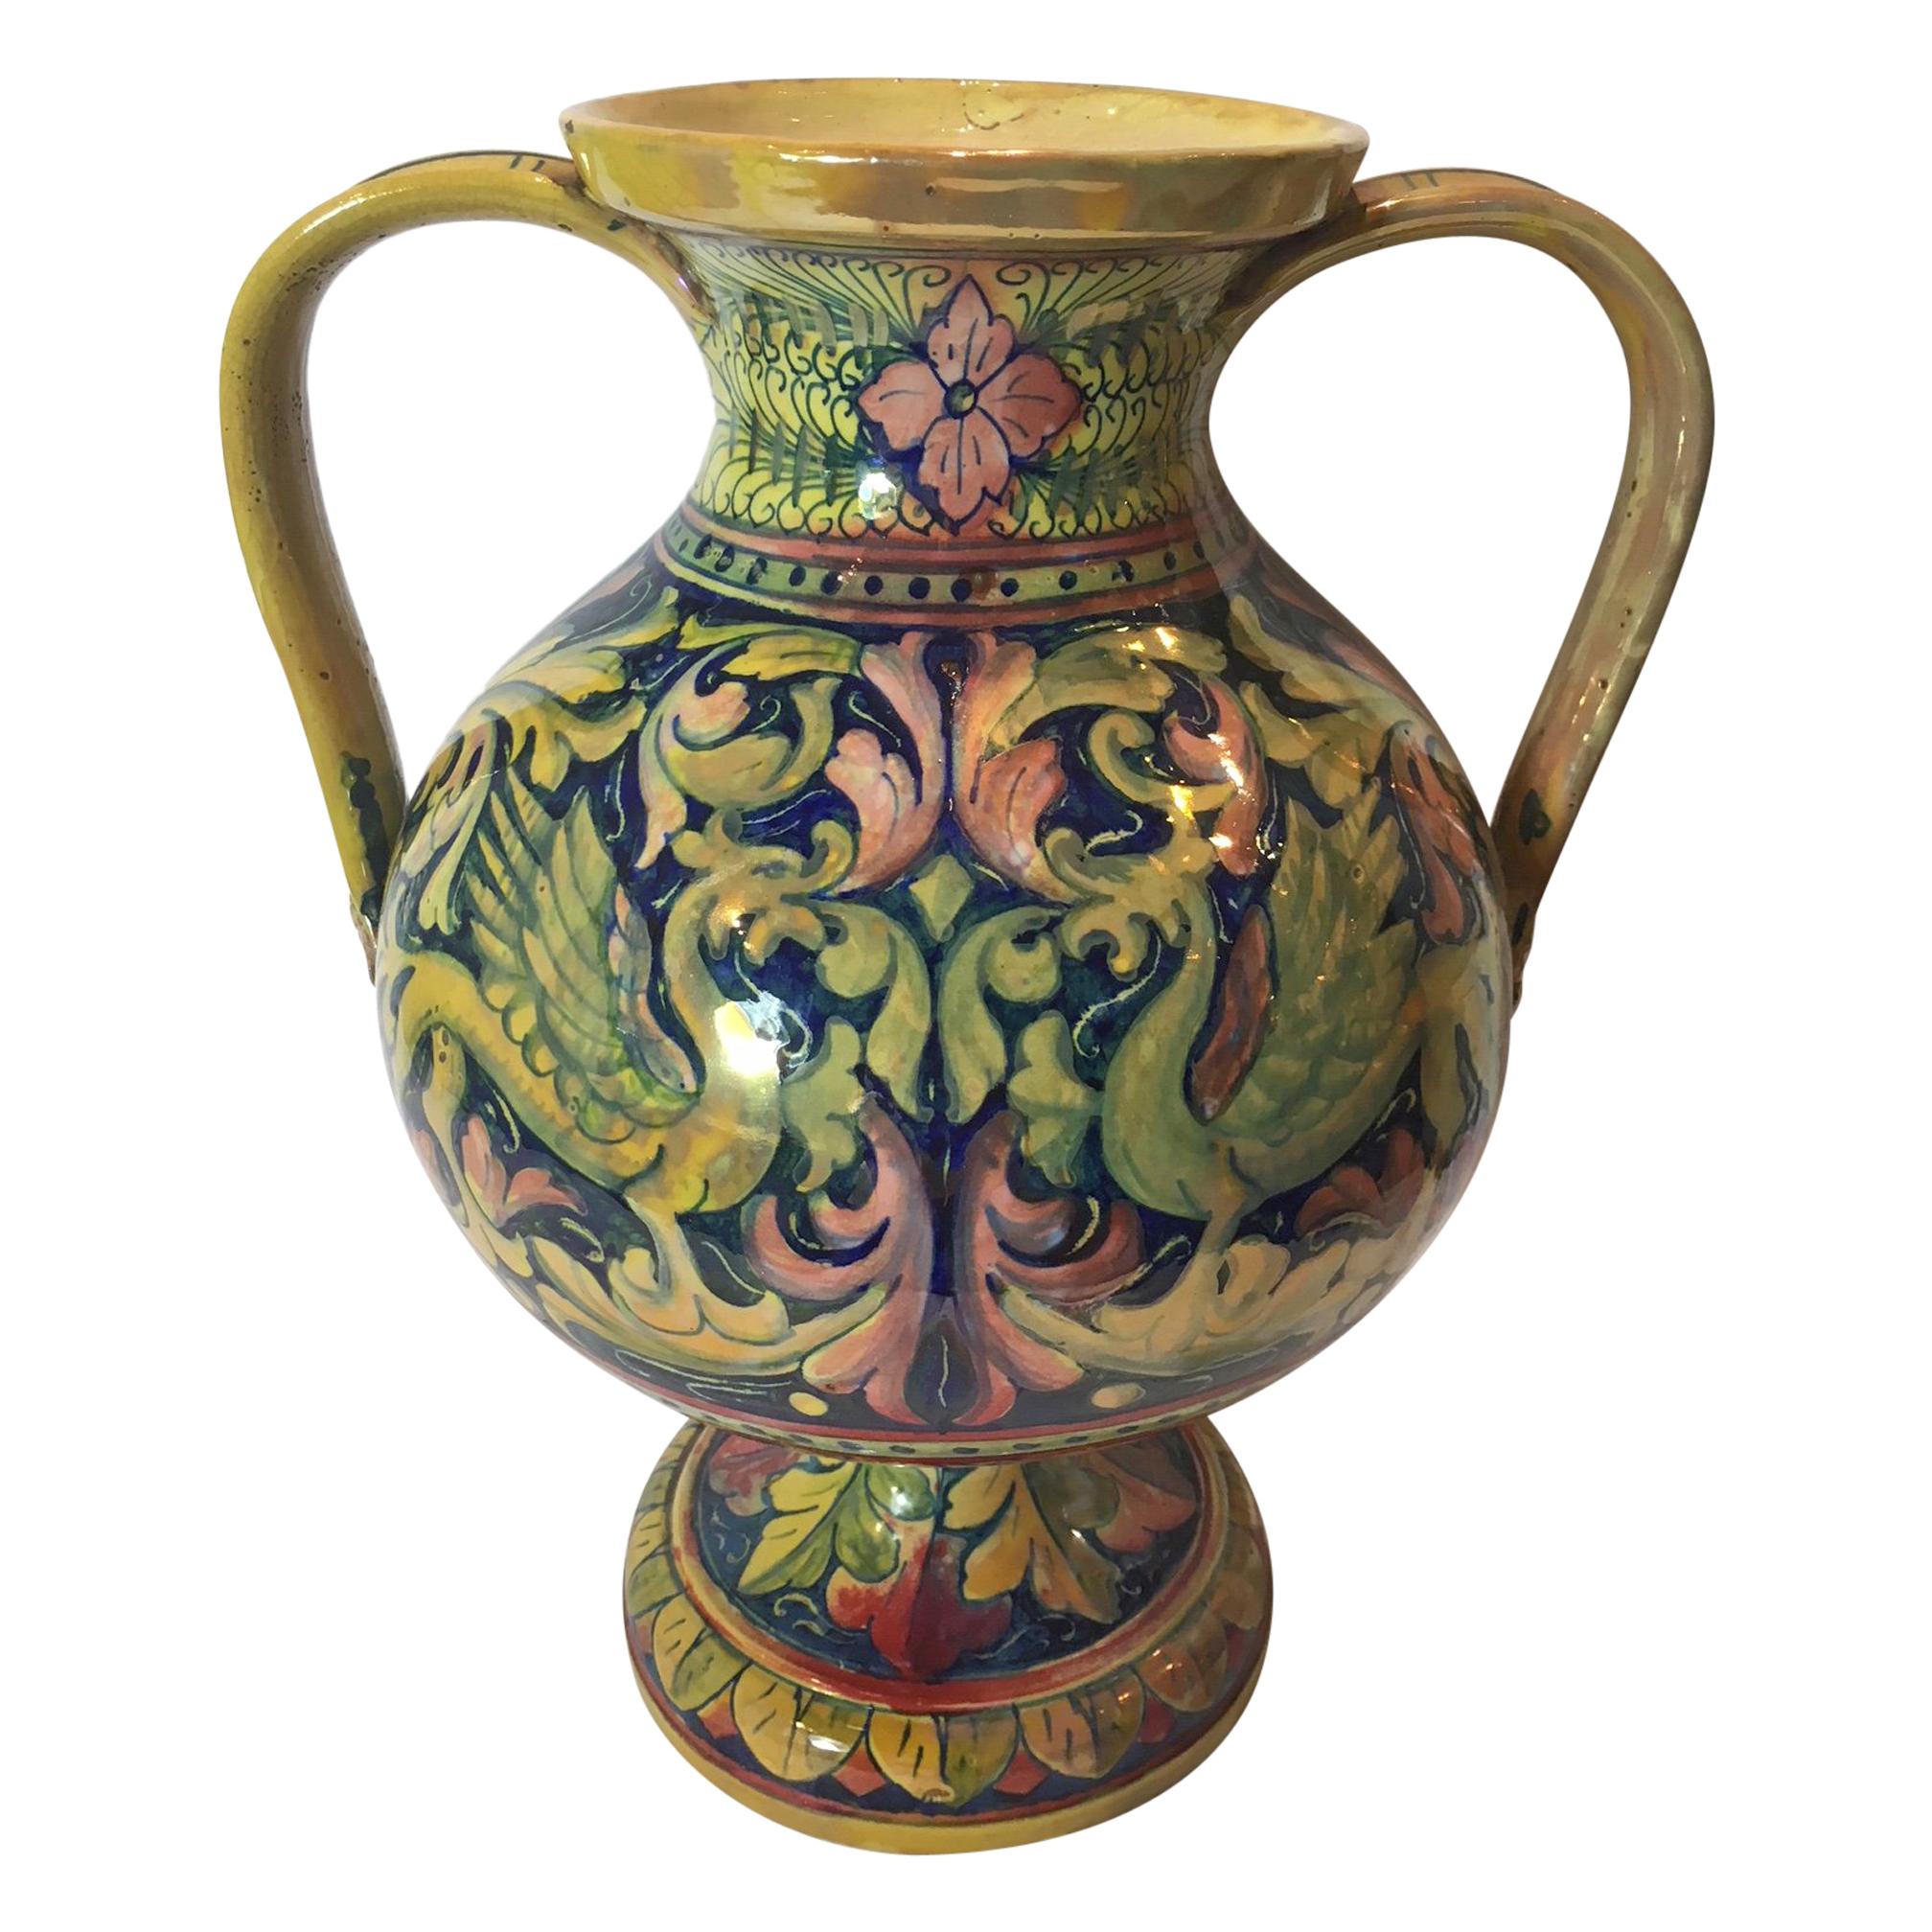 20th Century Renaissence Revival Polychrome Drawings Pottery Gualdo Tadino Vase For Sale